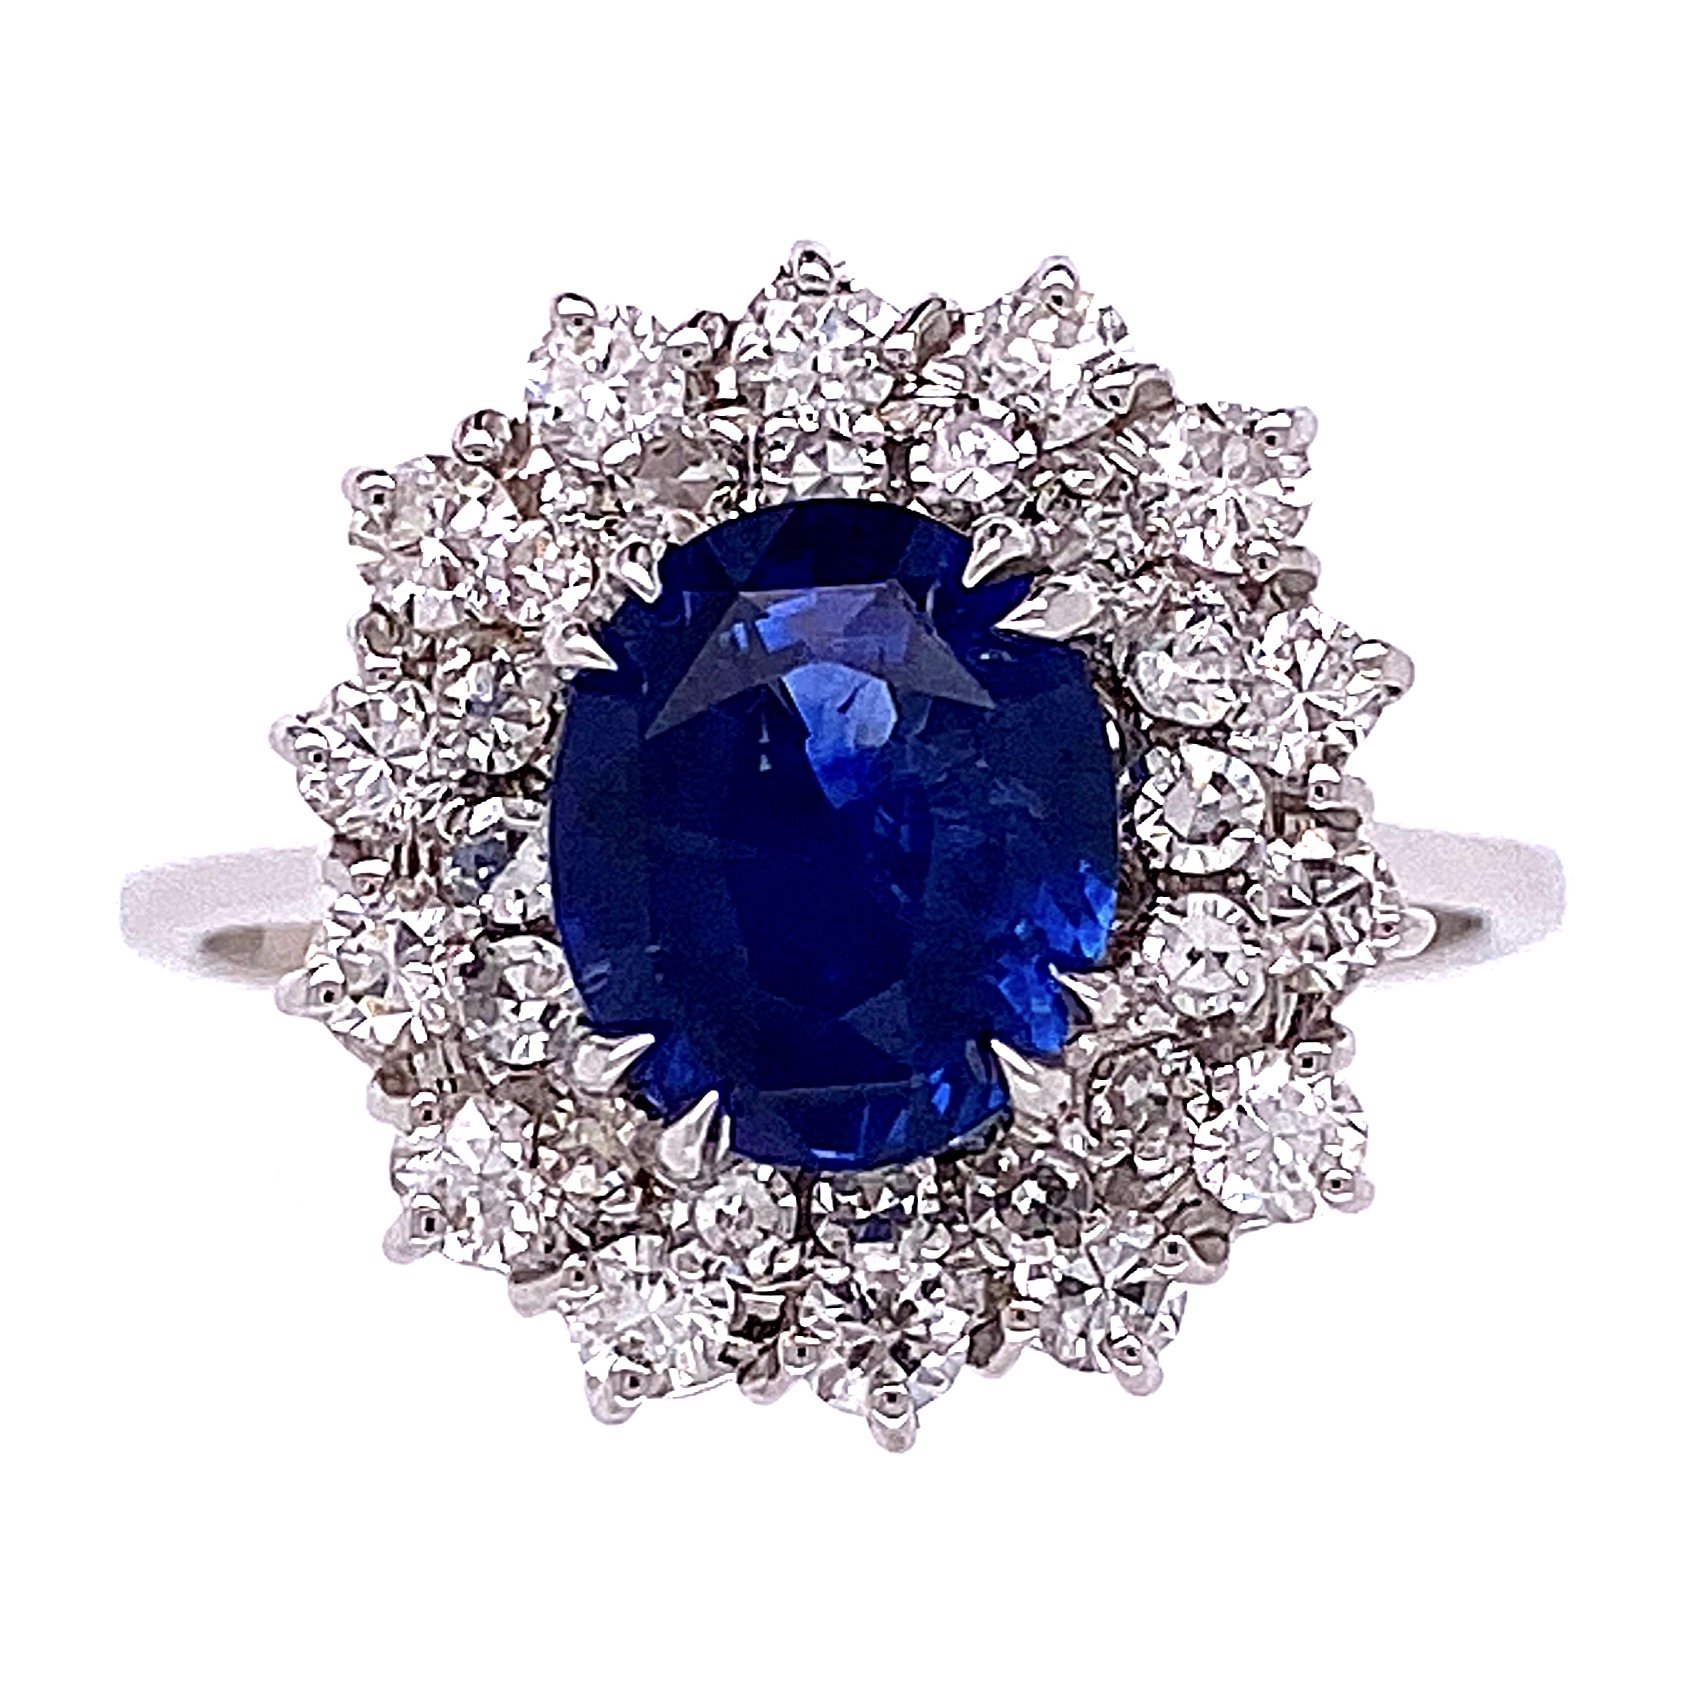 Natural Blue Sapphire 0.78 carats set in 14K White Gold Ring with Diamonds  / Jupitergem